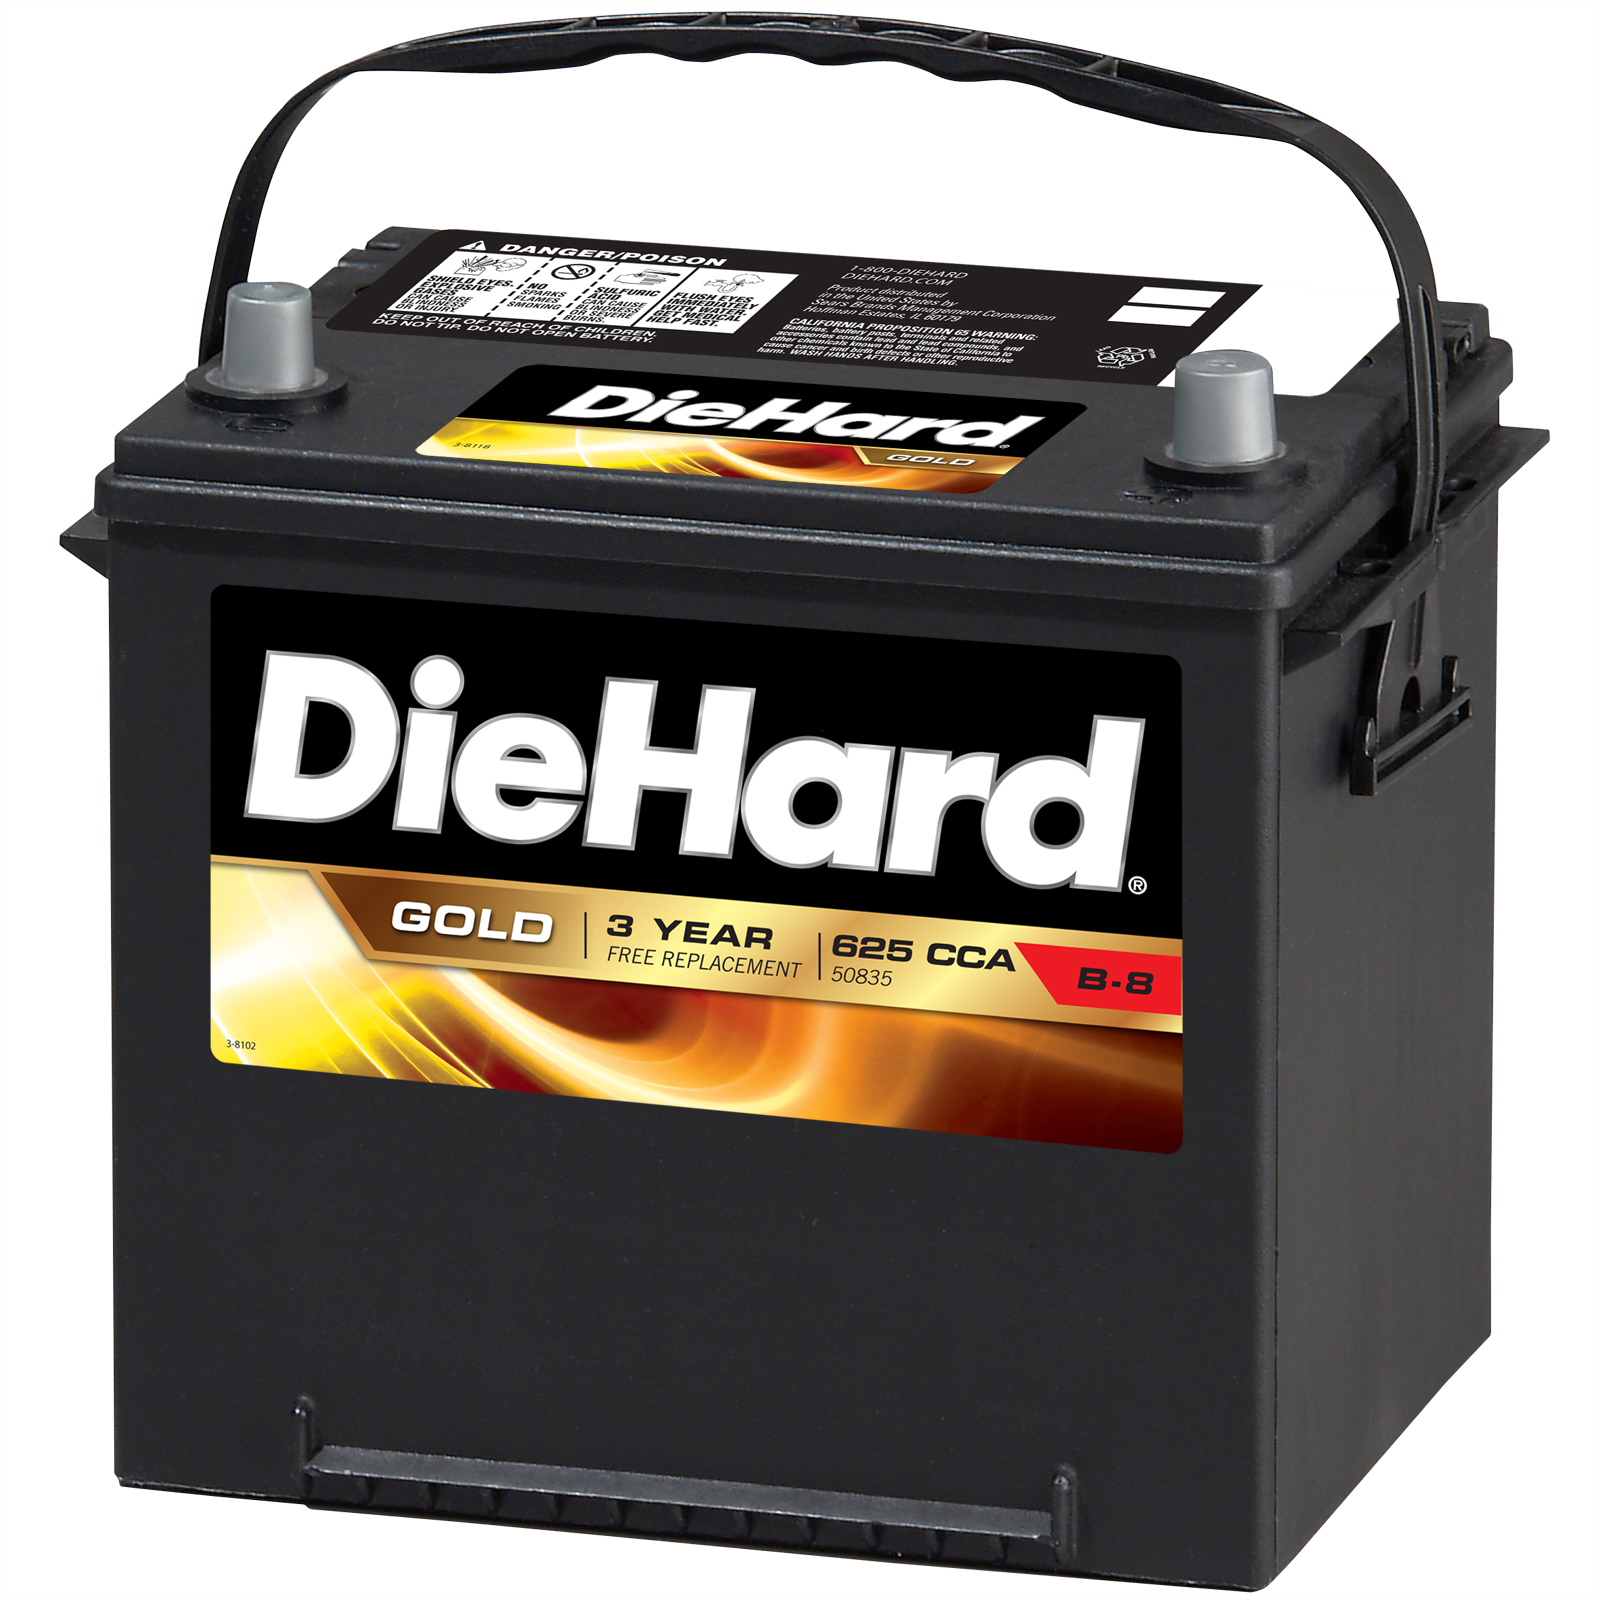 DieHard Gold Automotive Battery 50835 - Group Size EP-35